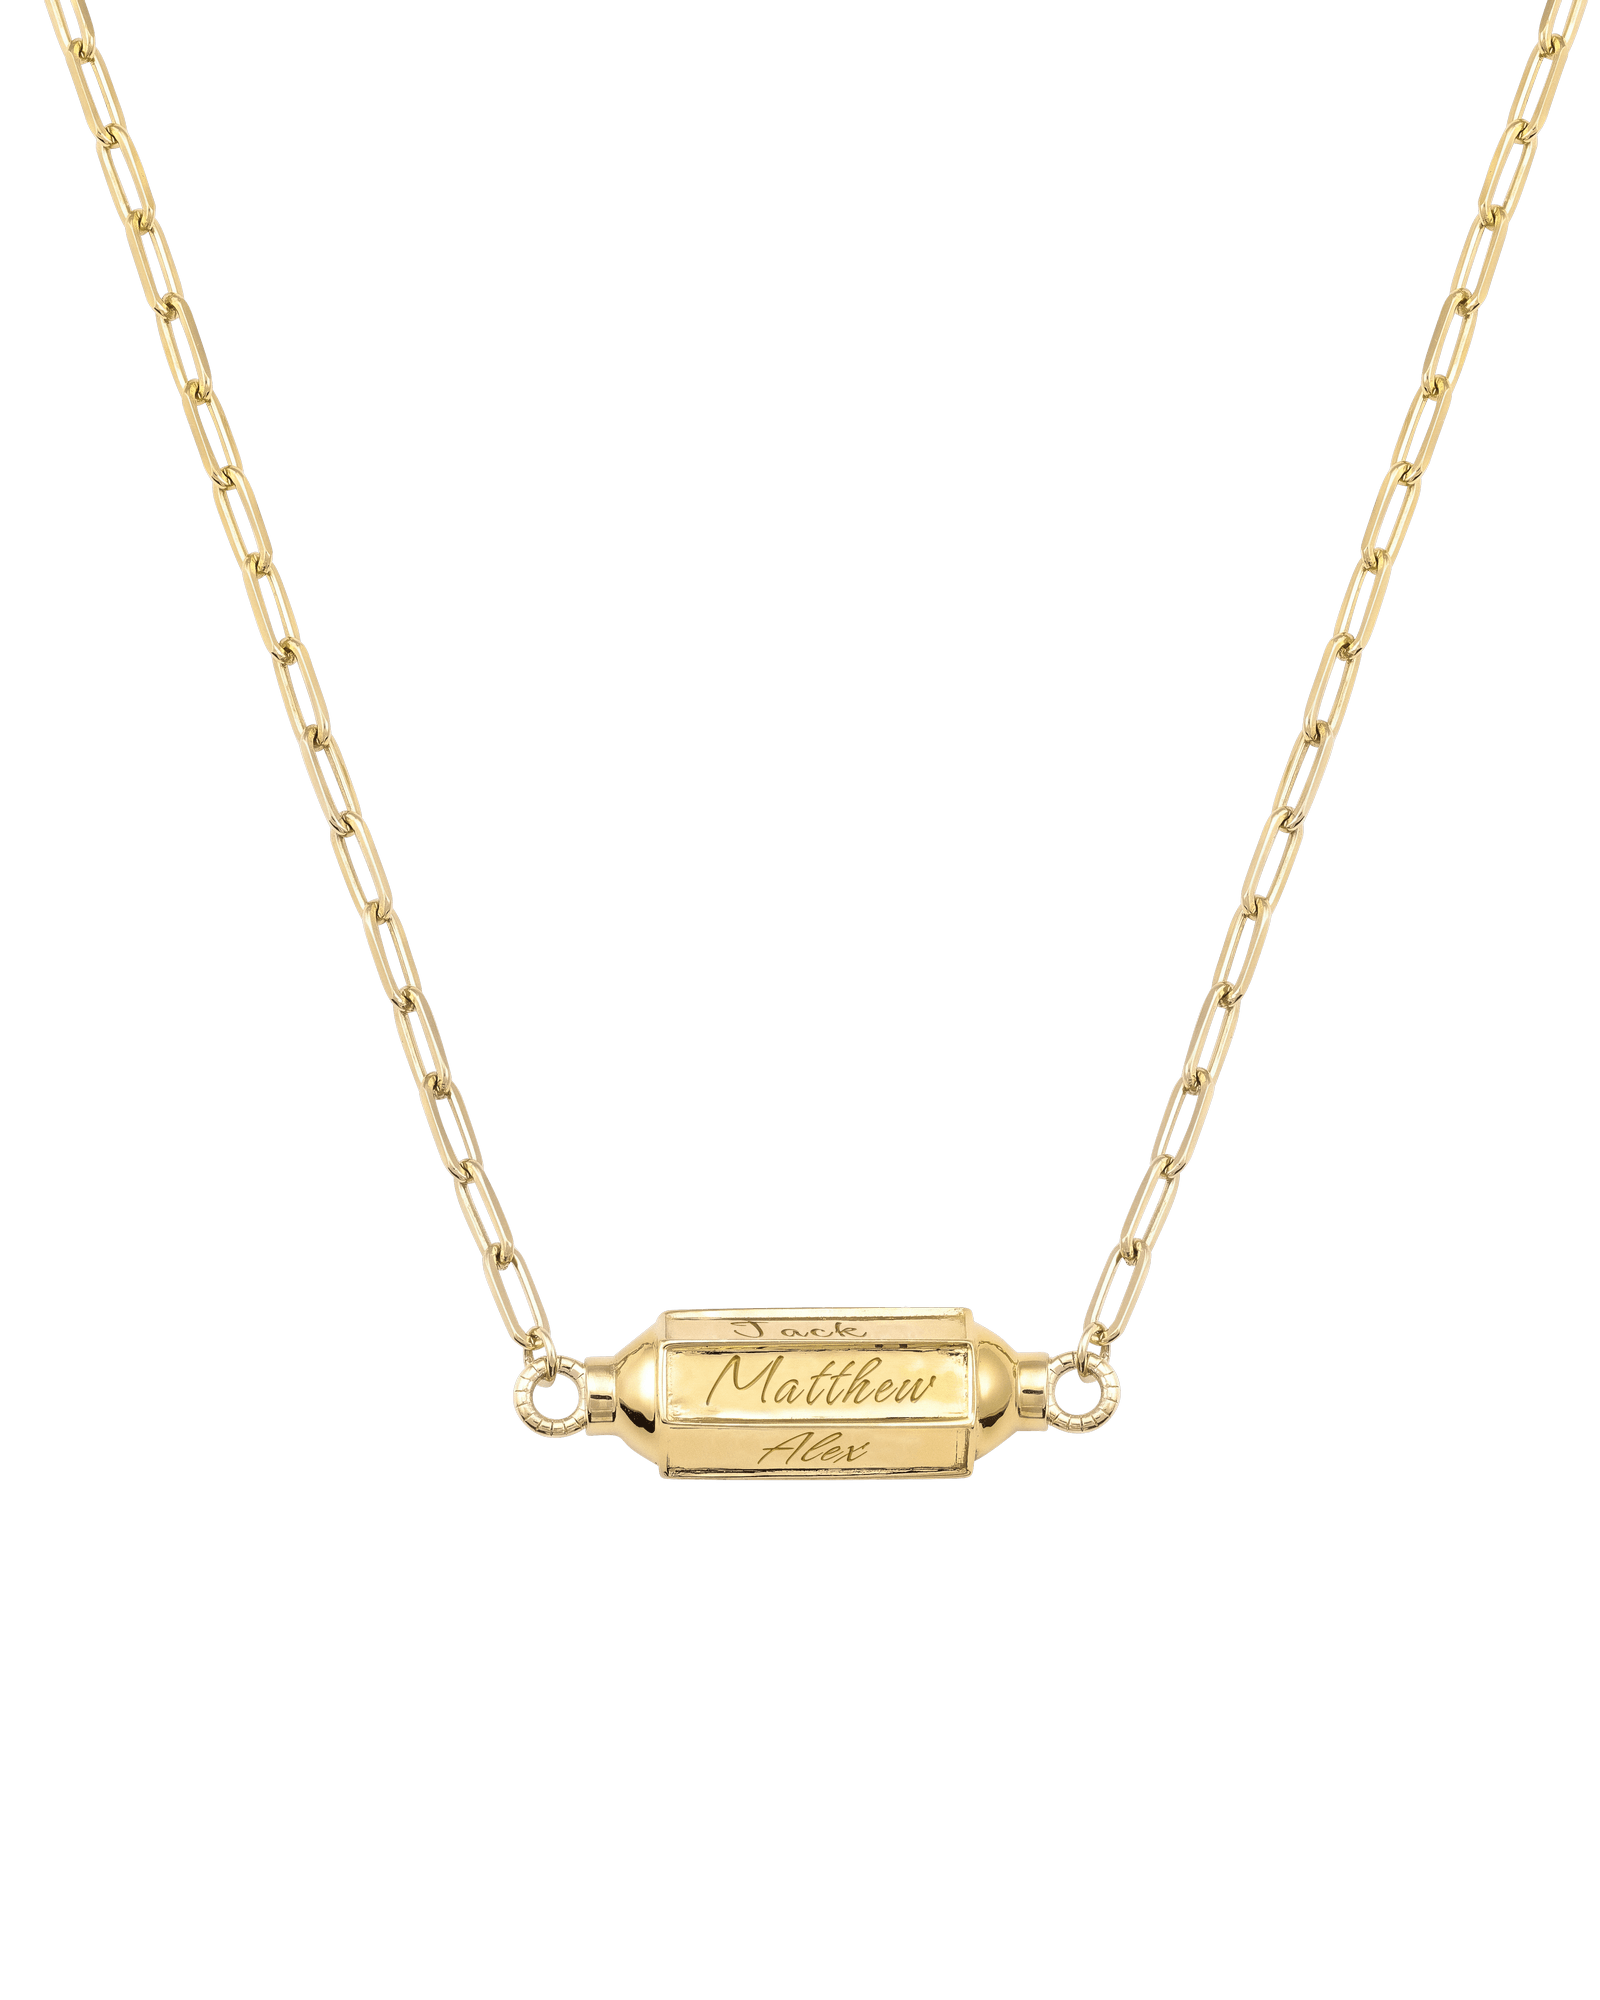 Hexagonal Bar Necklace - 18k Gold Vermeil Necklaces Gold Vermeil Hurricane (Handwriting style) 